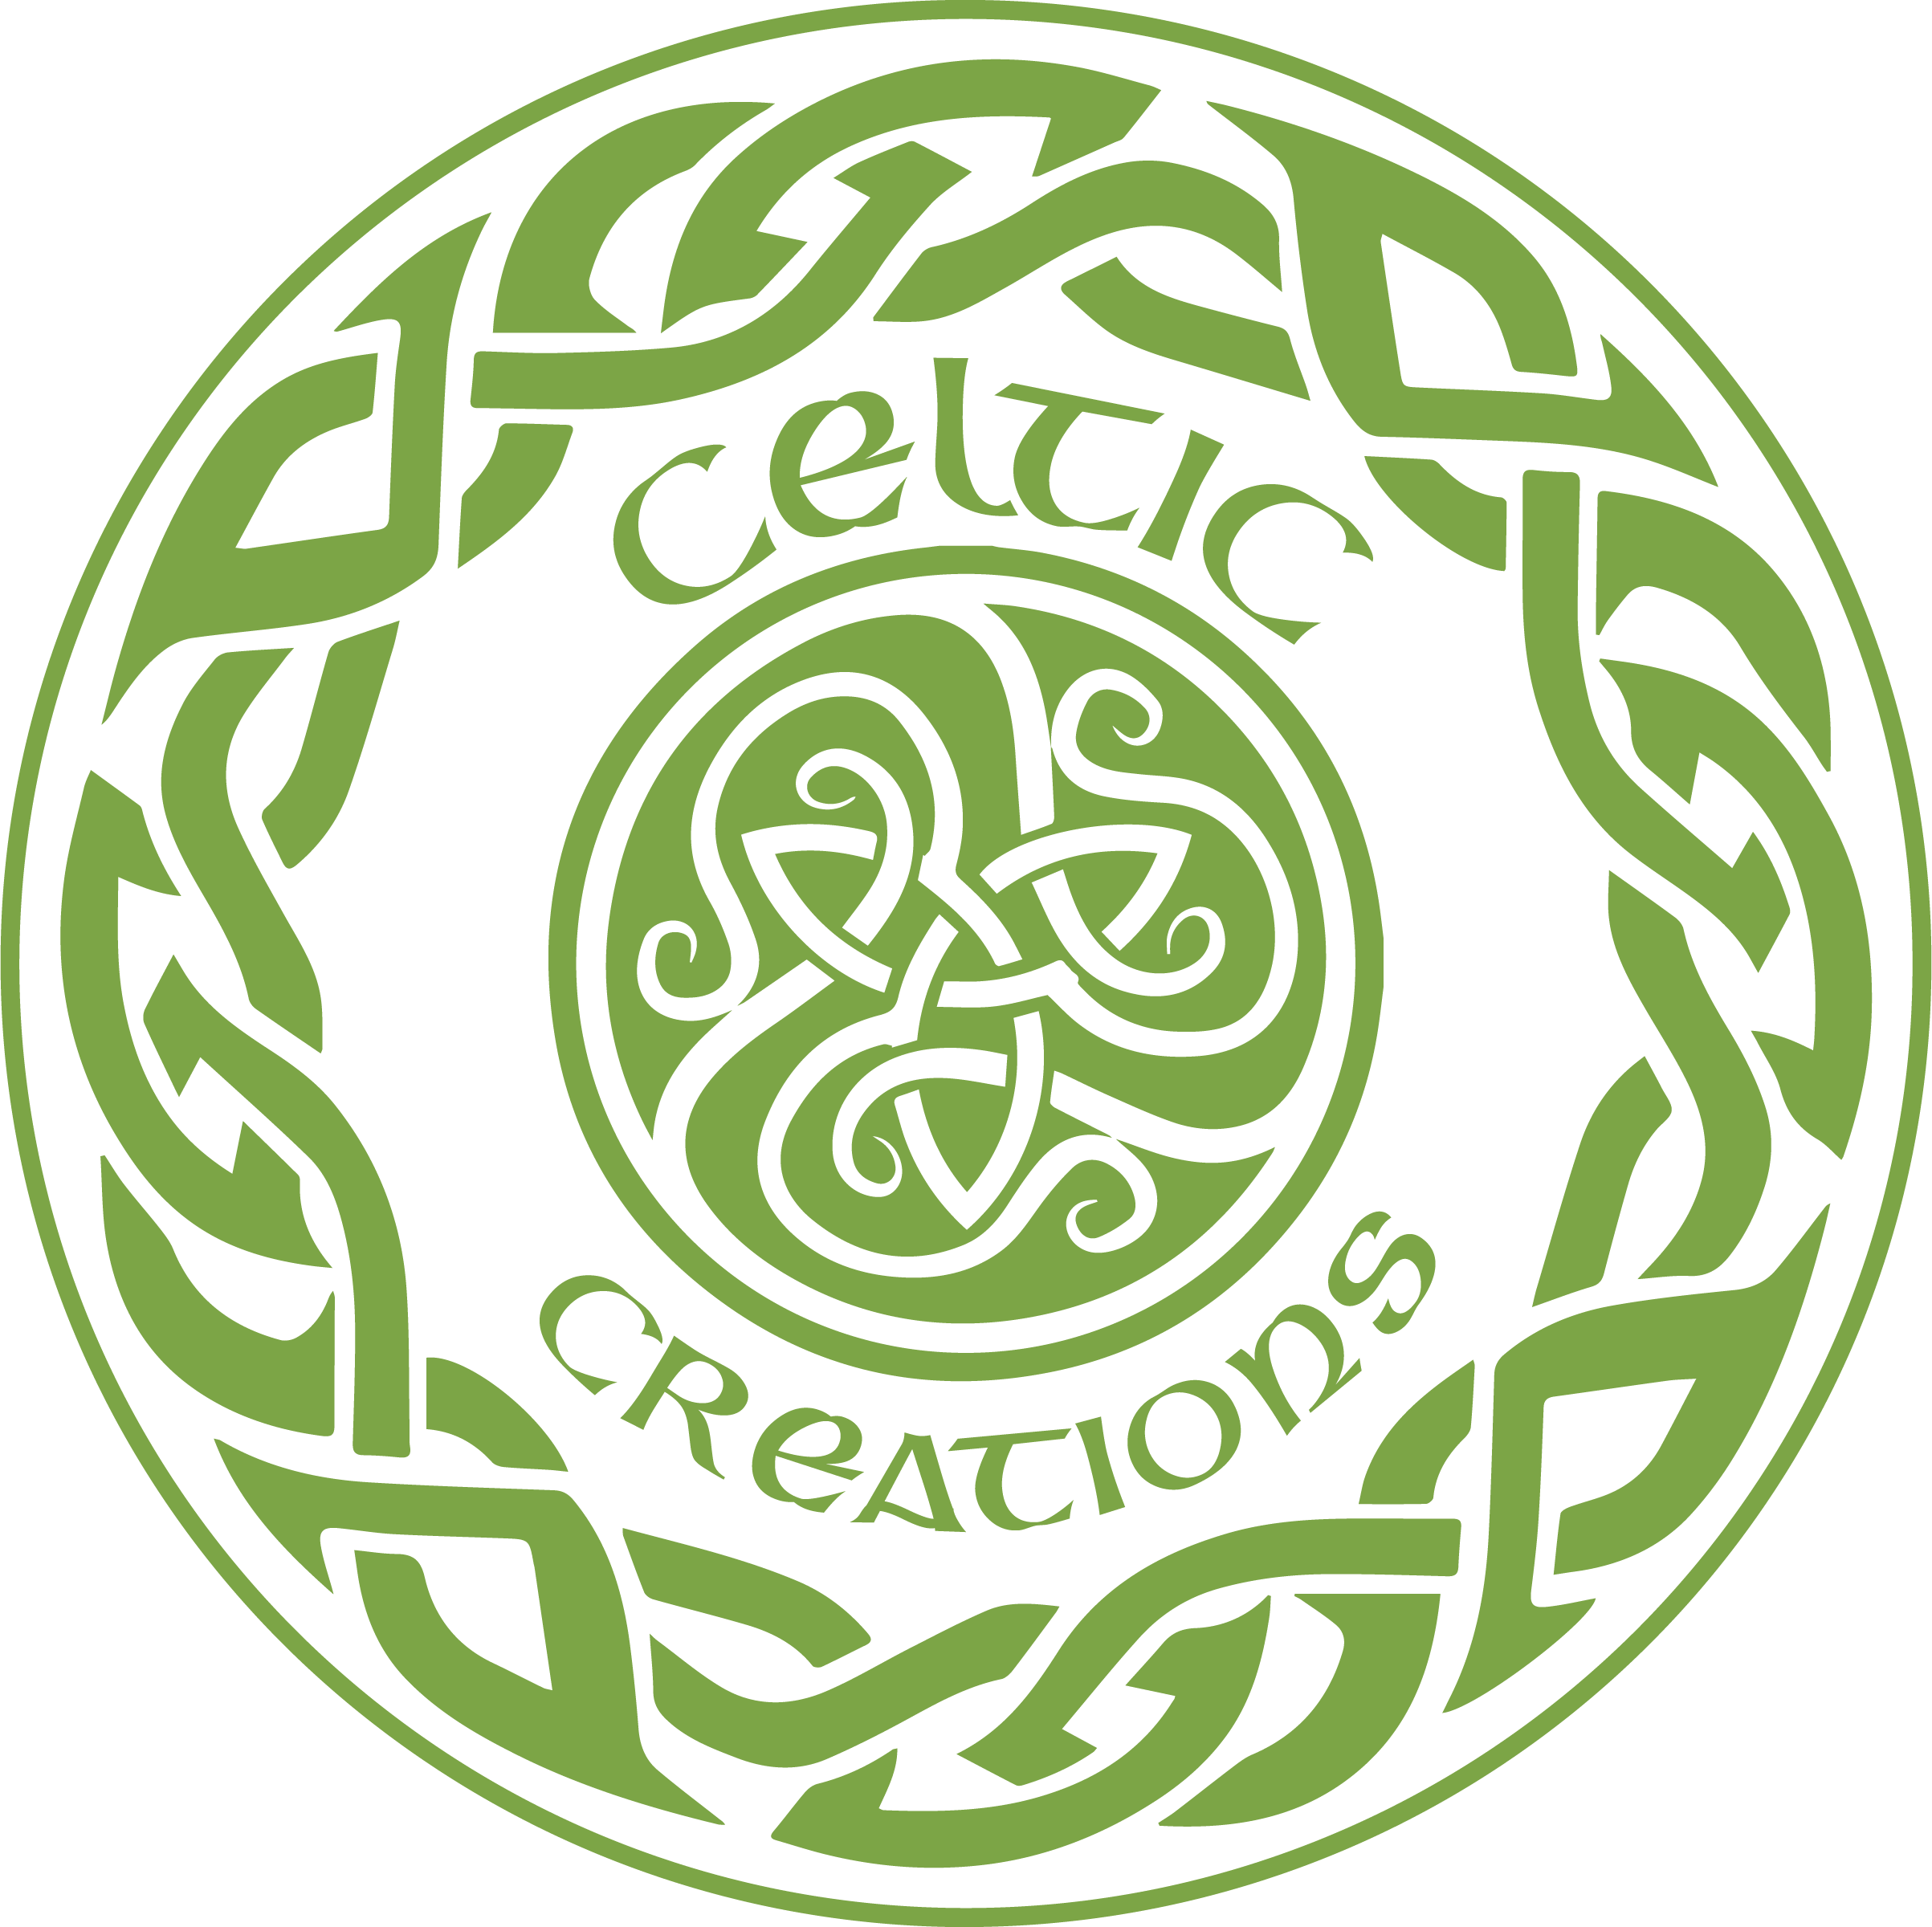 Celtic Creations